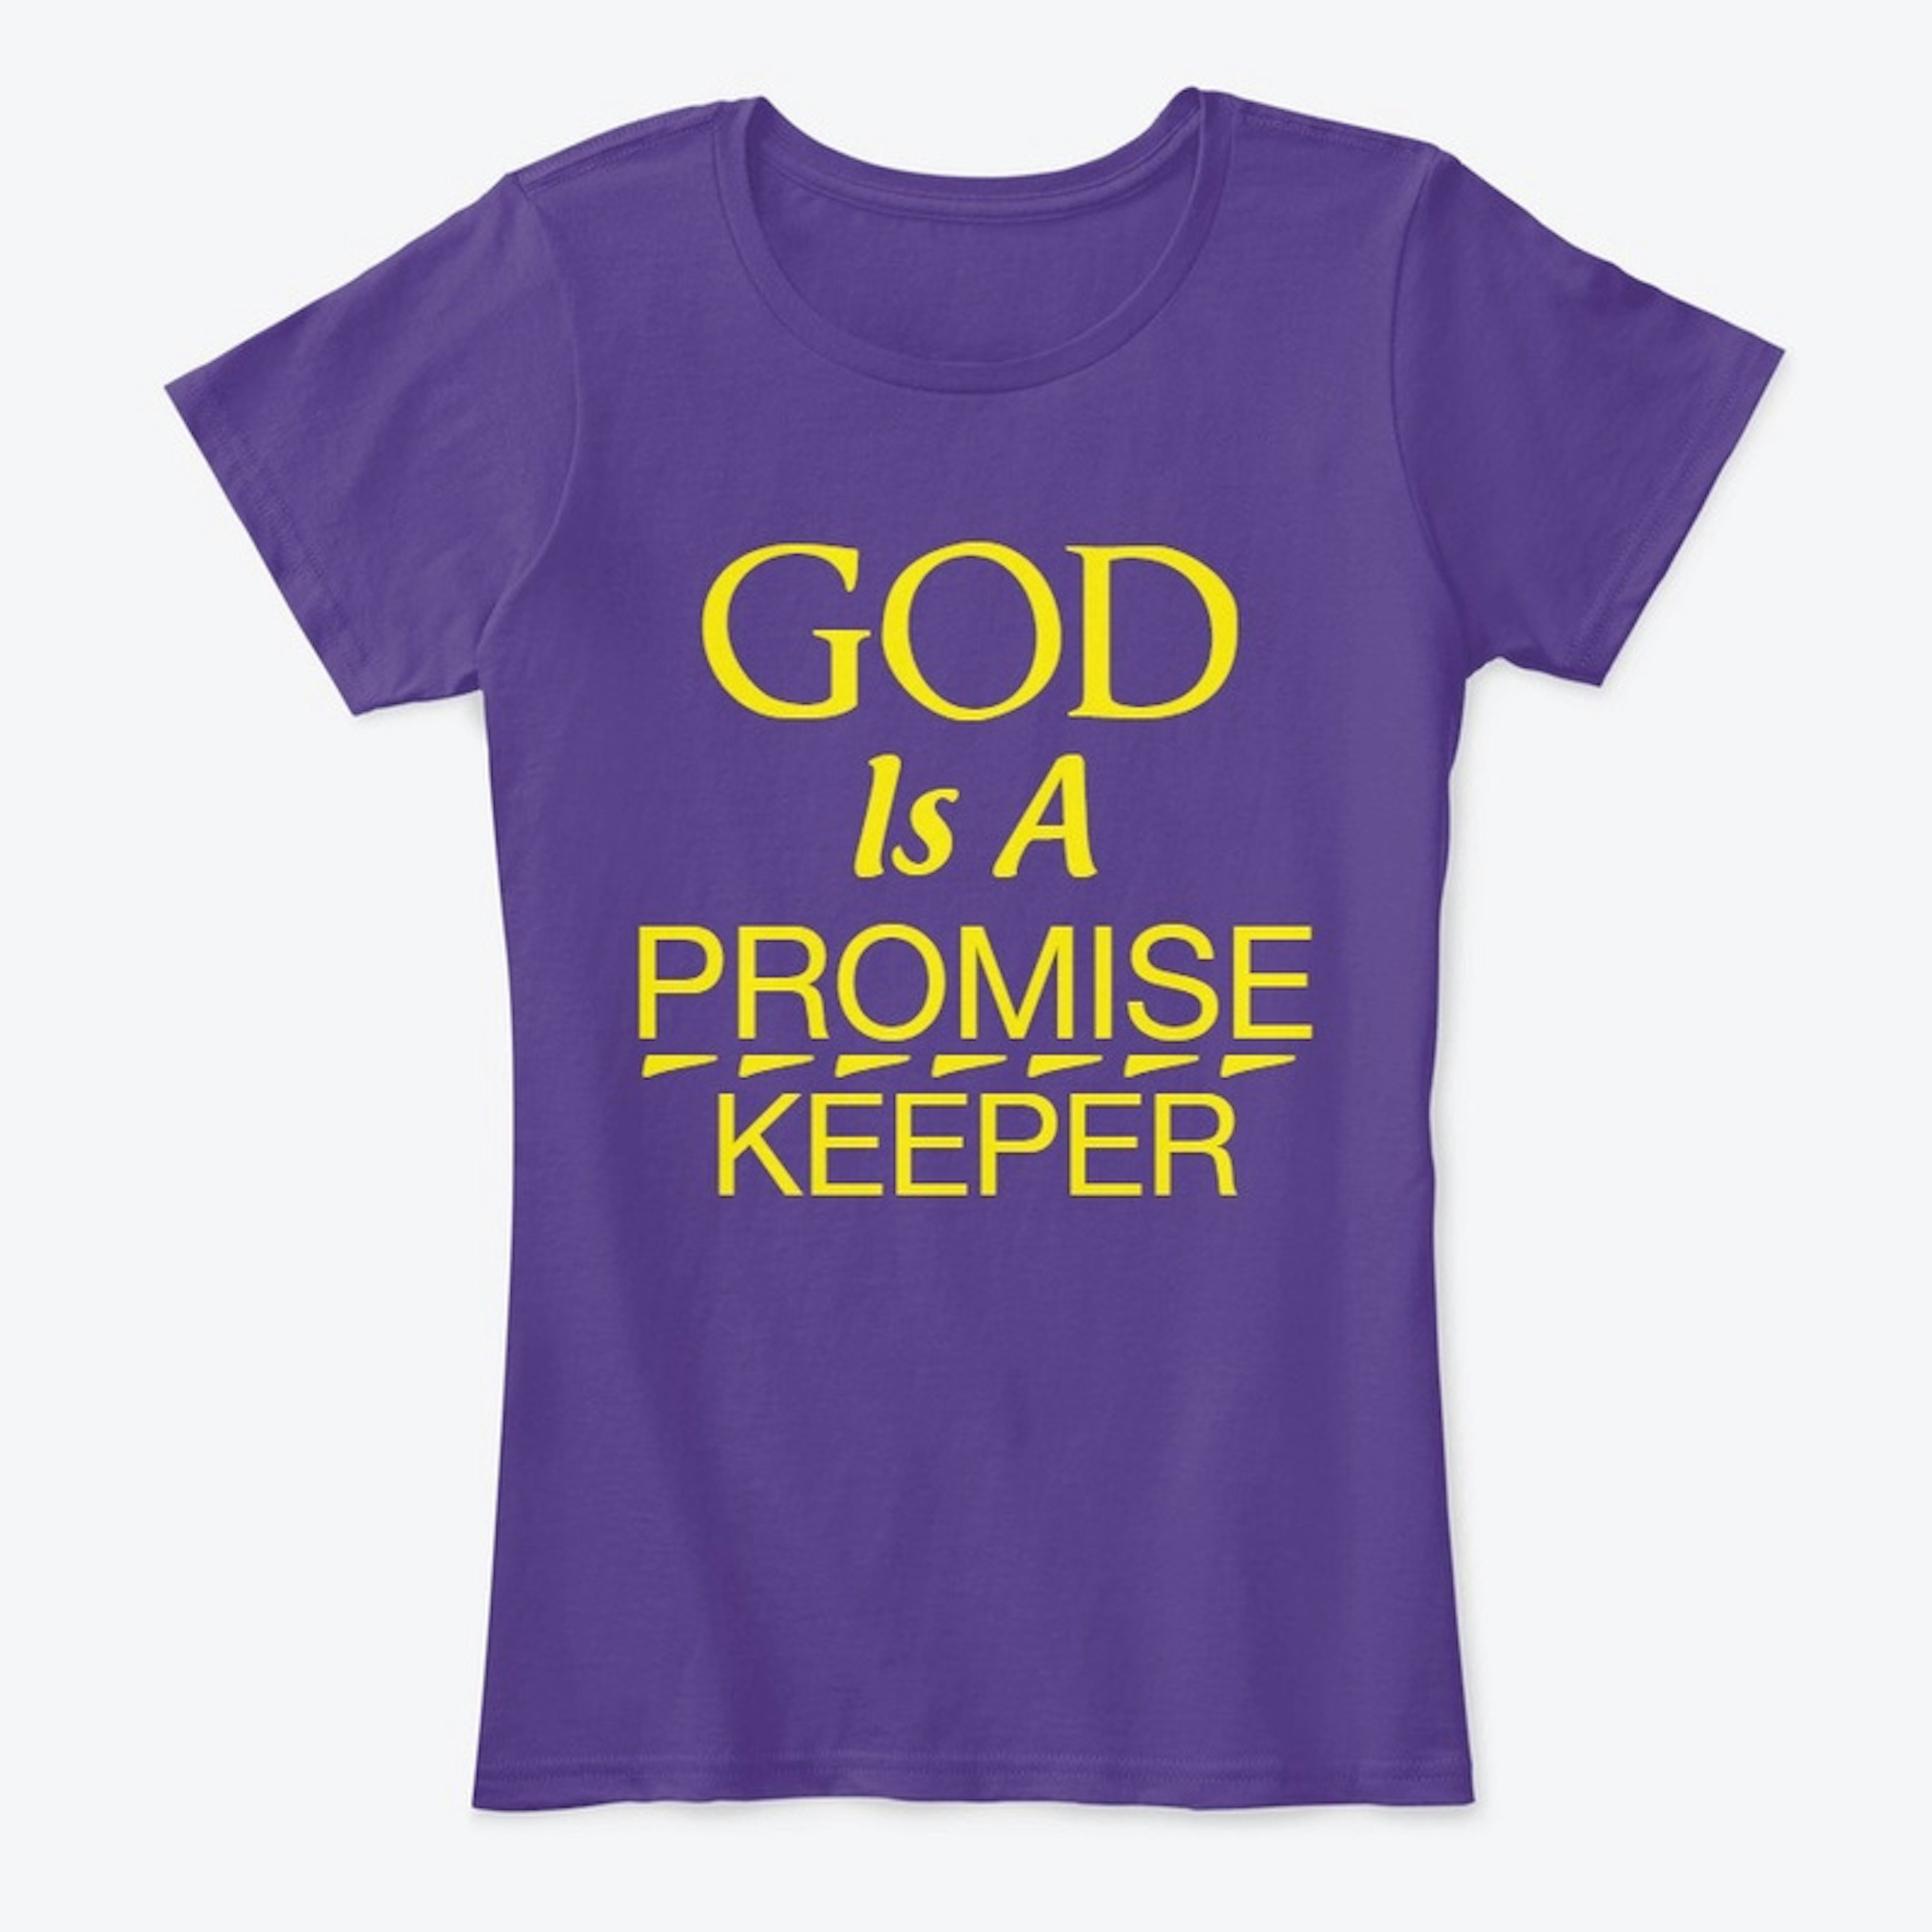 God Is A Promis Keeper Tees